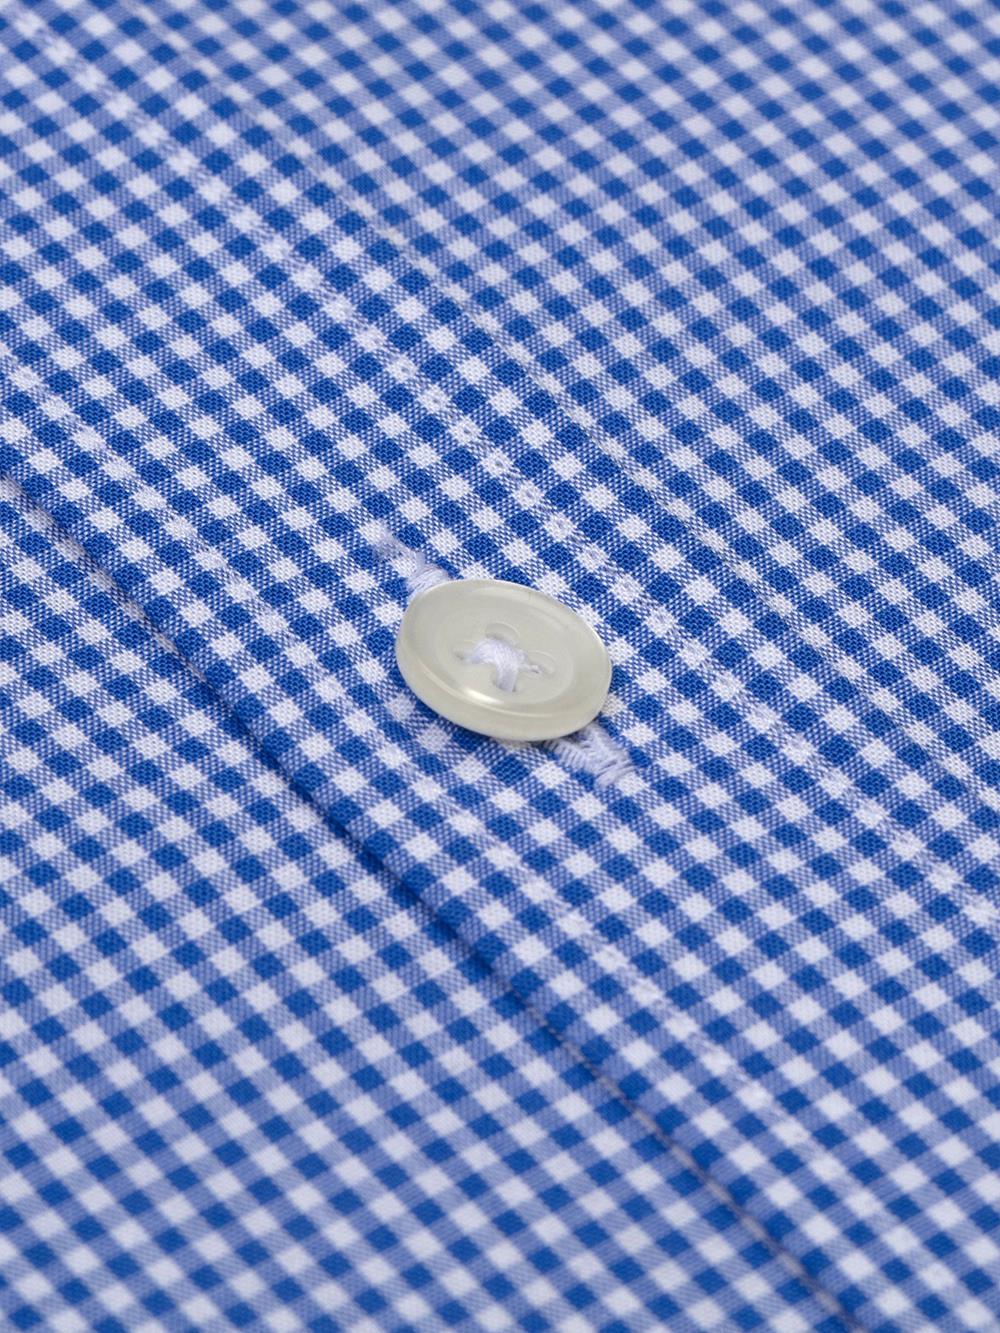 Blue vichy tile shirt - Short Sleeves